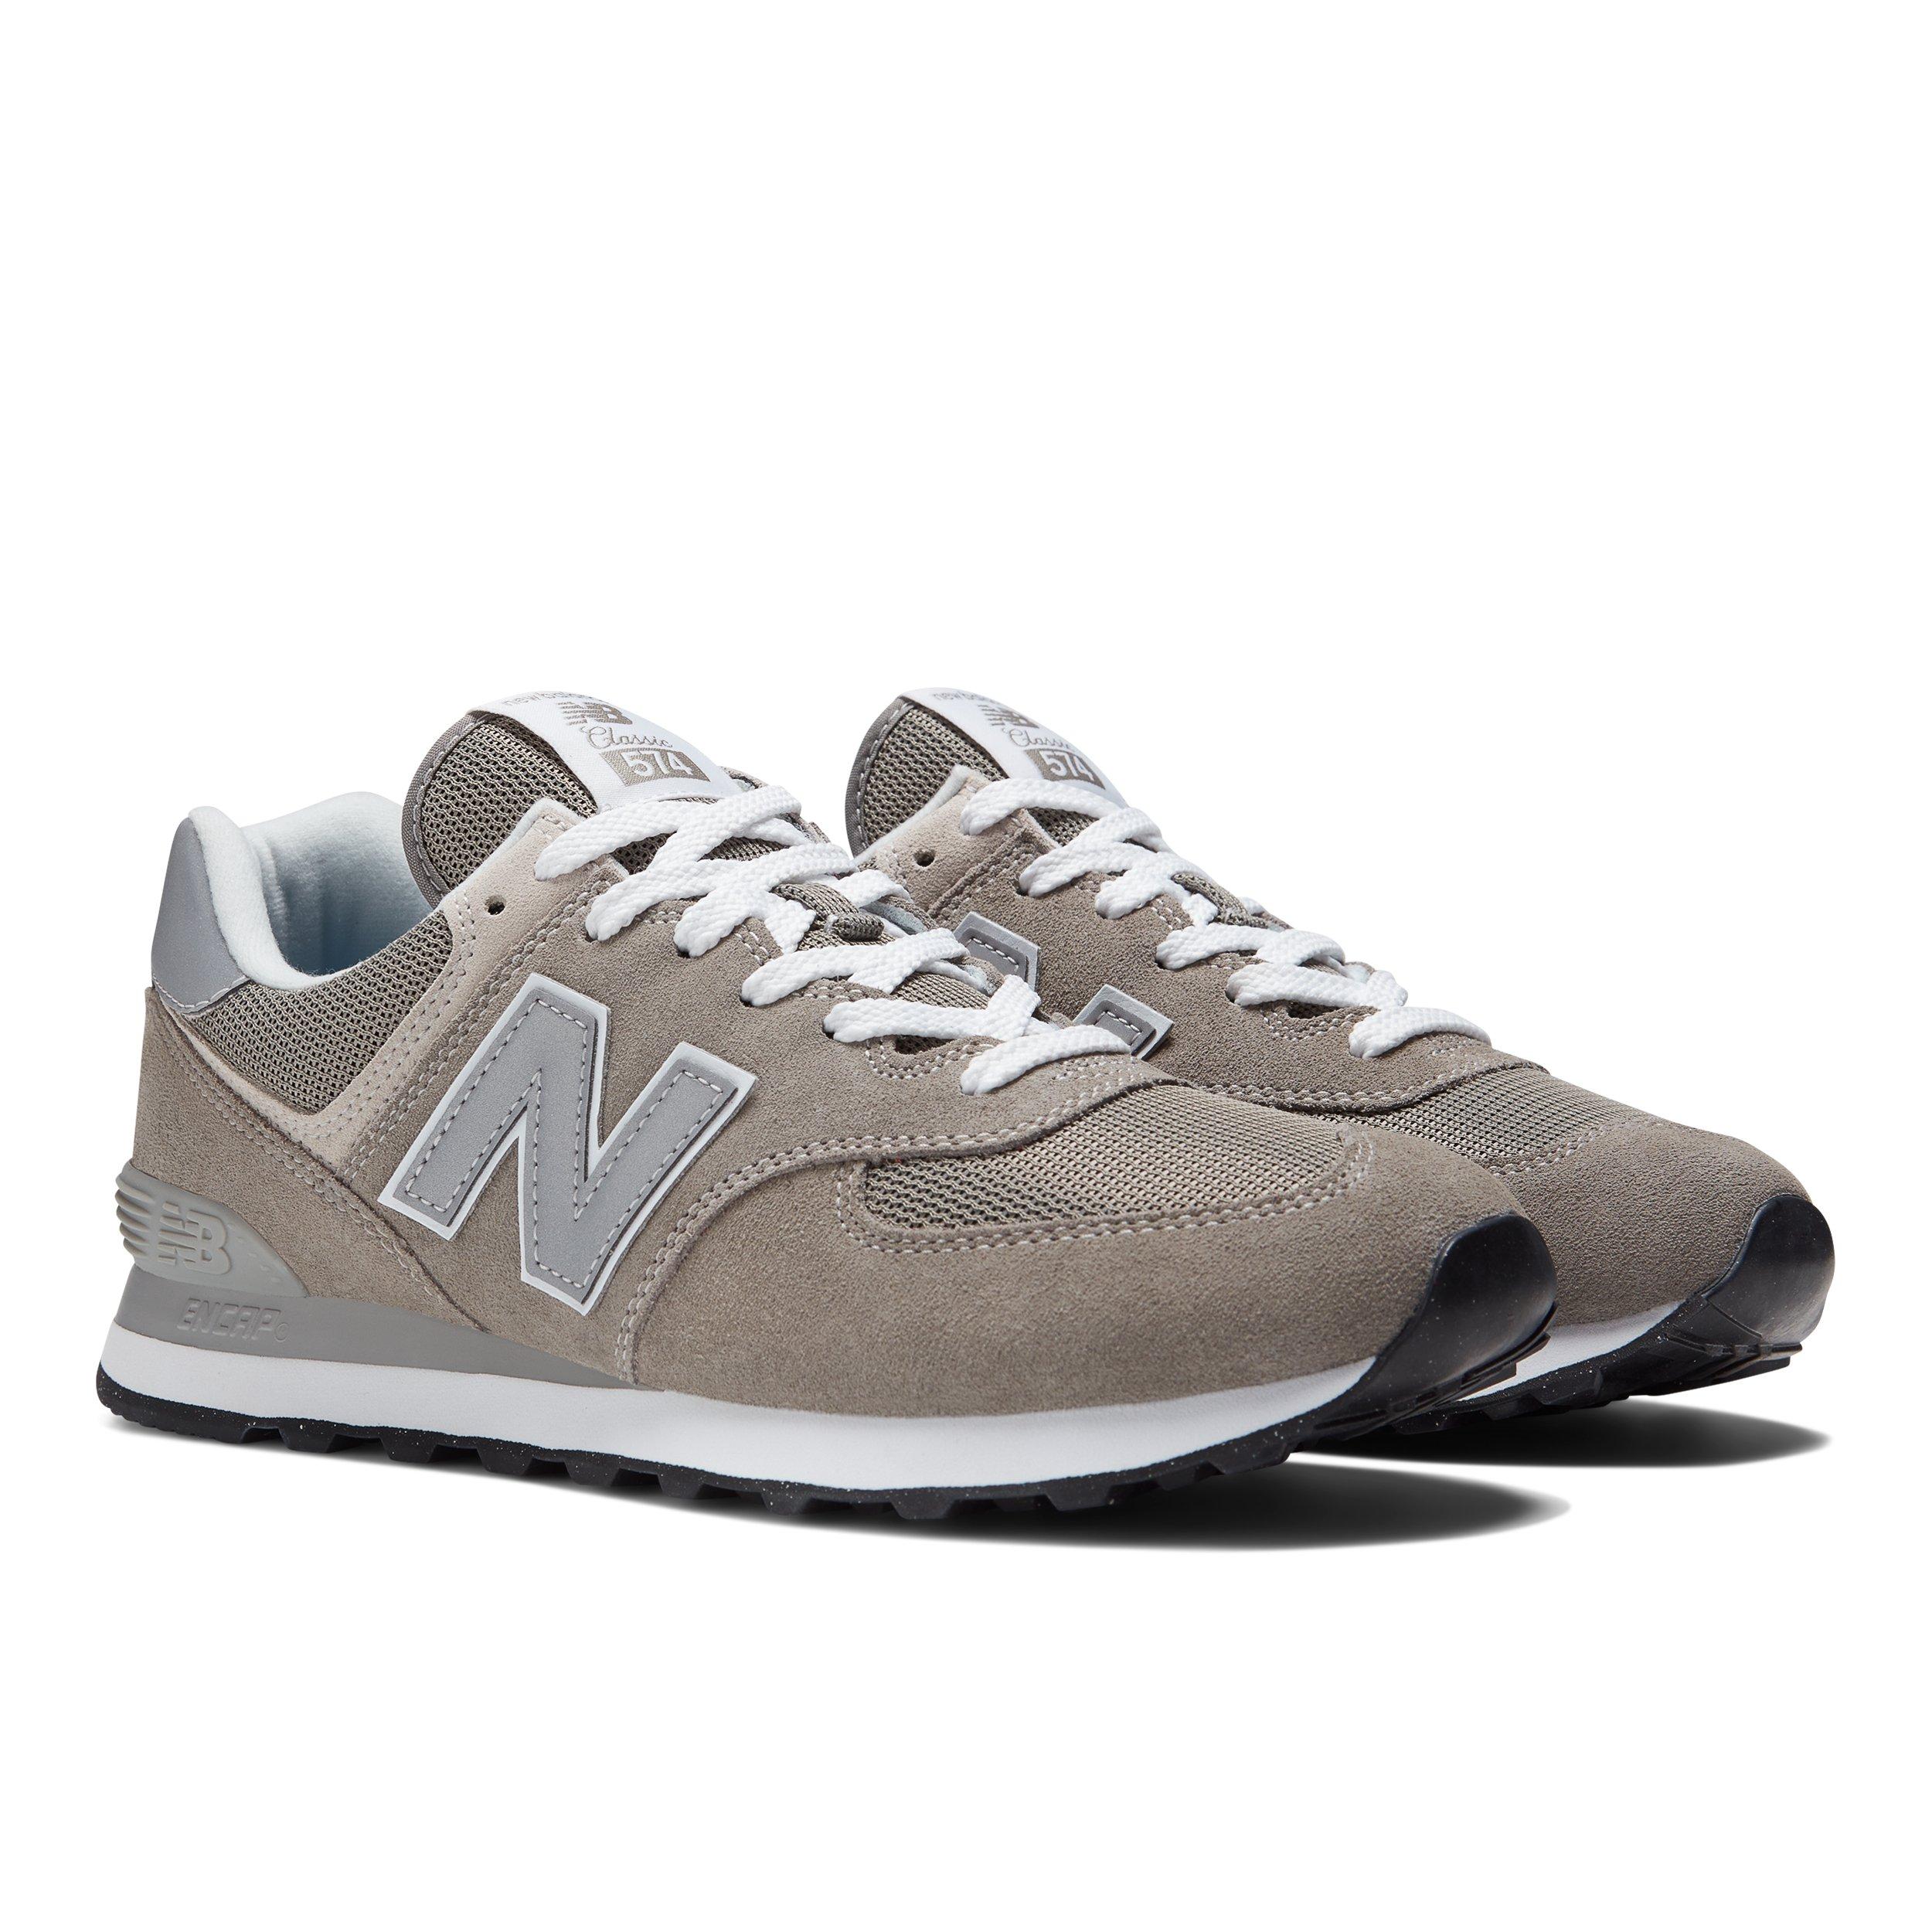 New Balance 574 "Grey" Shoe